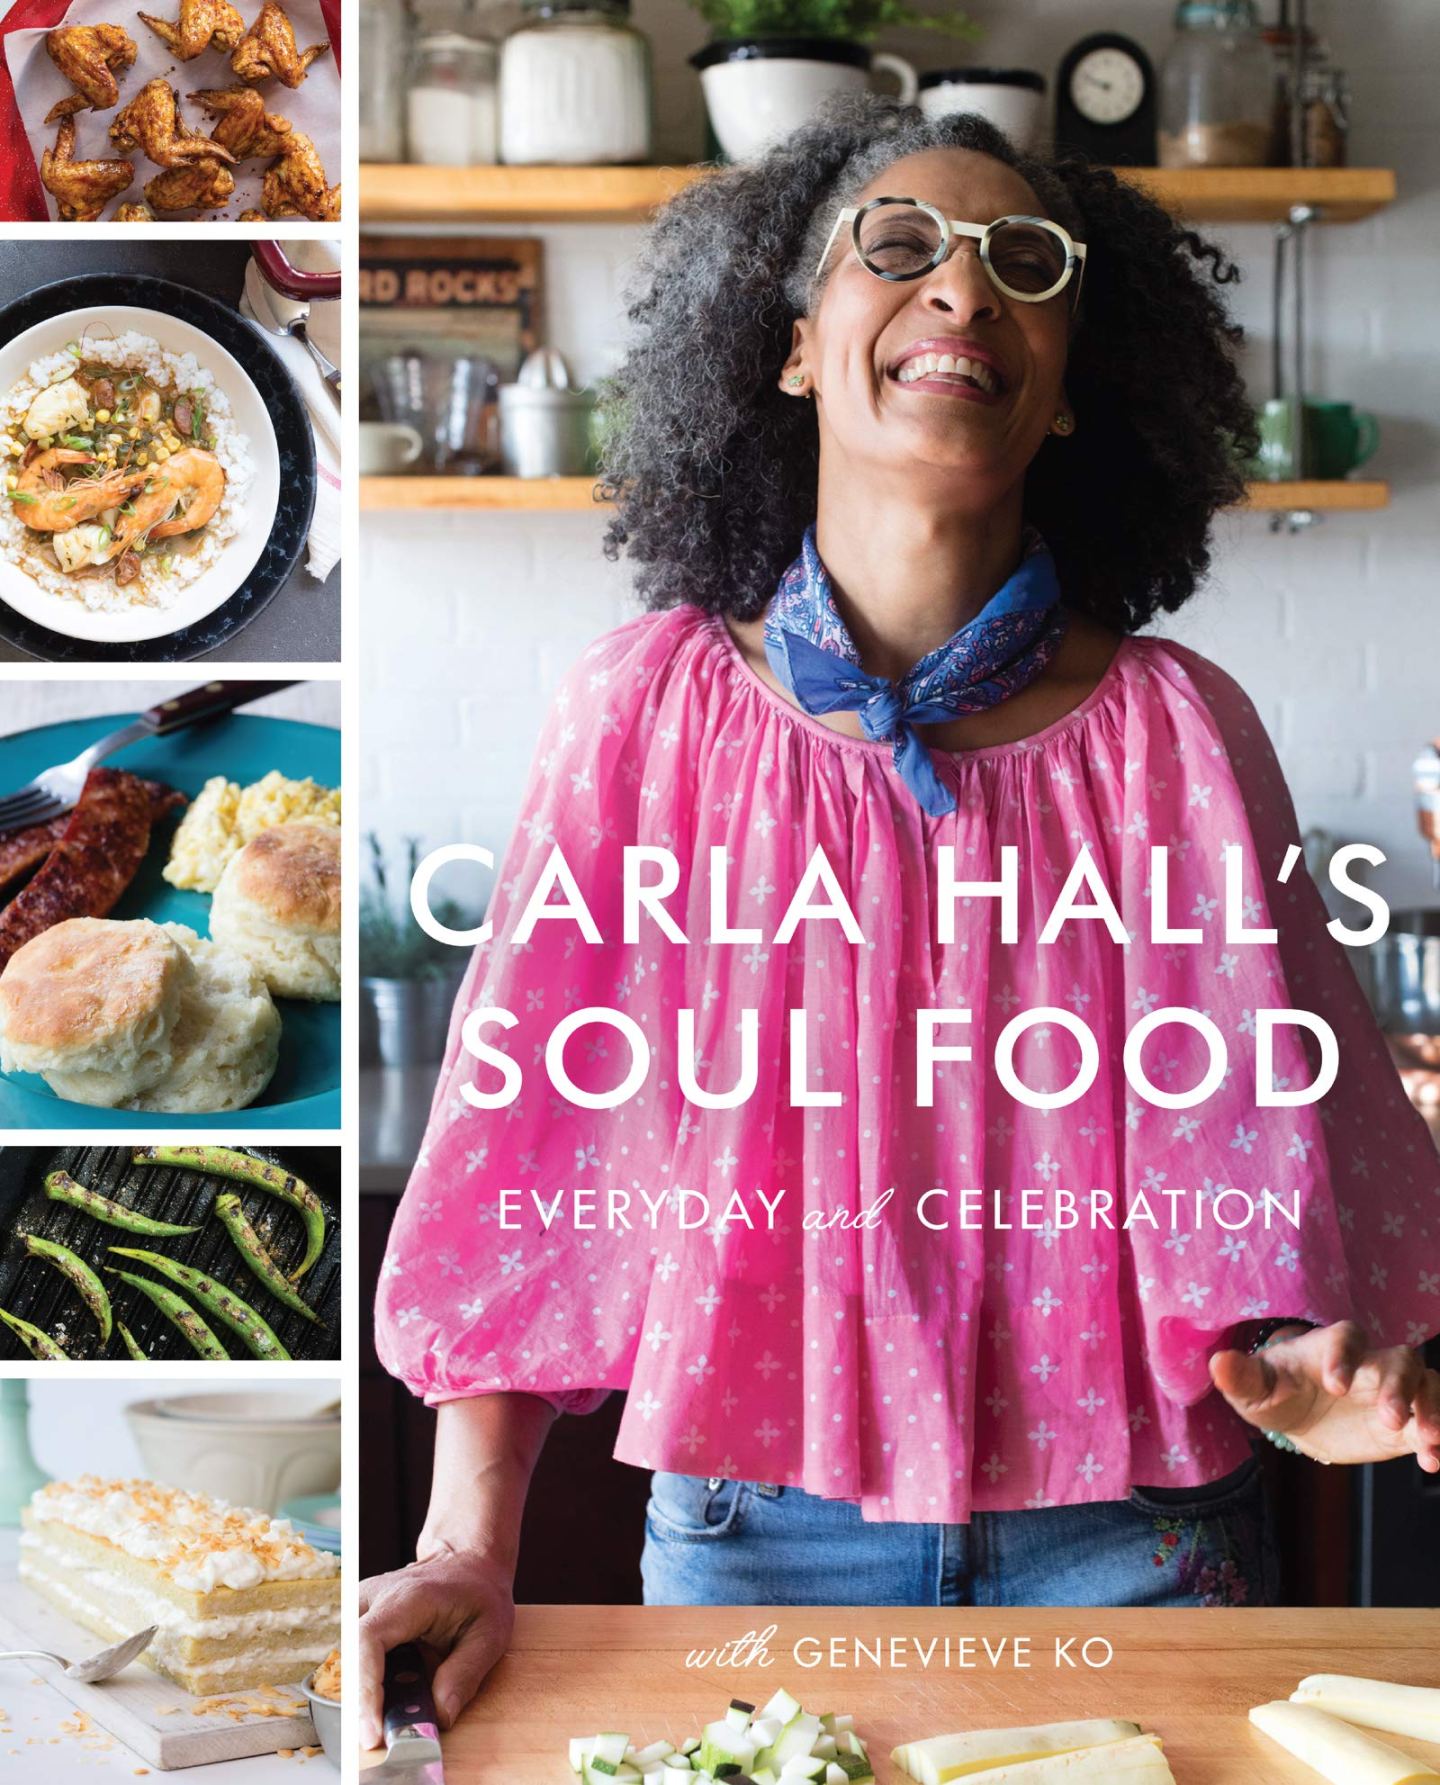 Carla Hall's Soul Food book